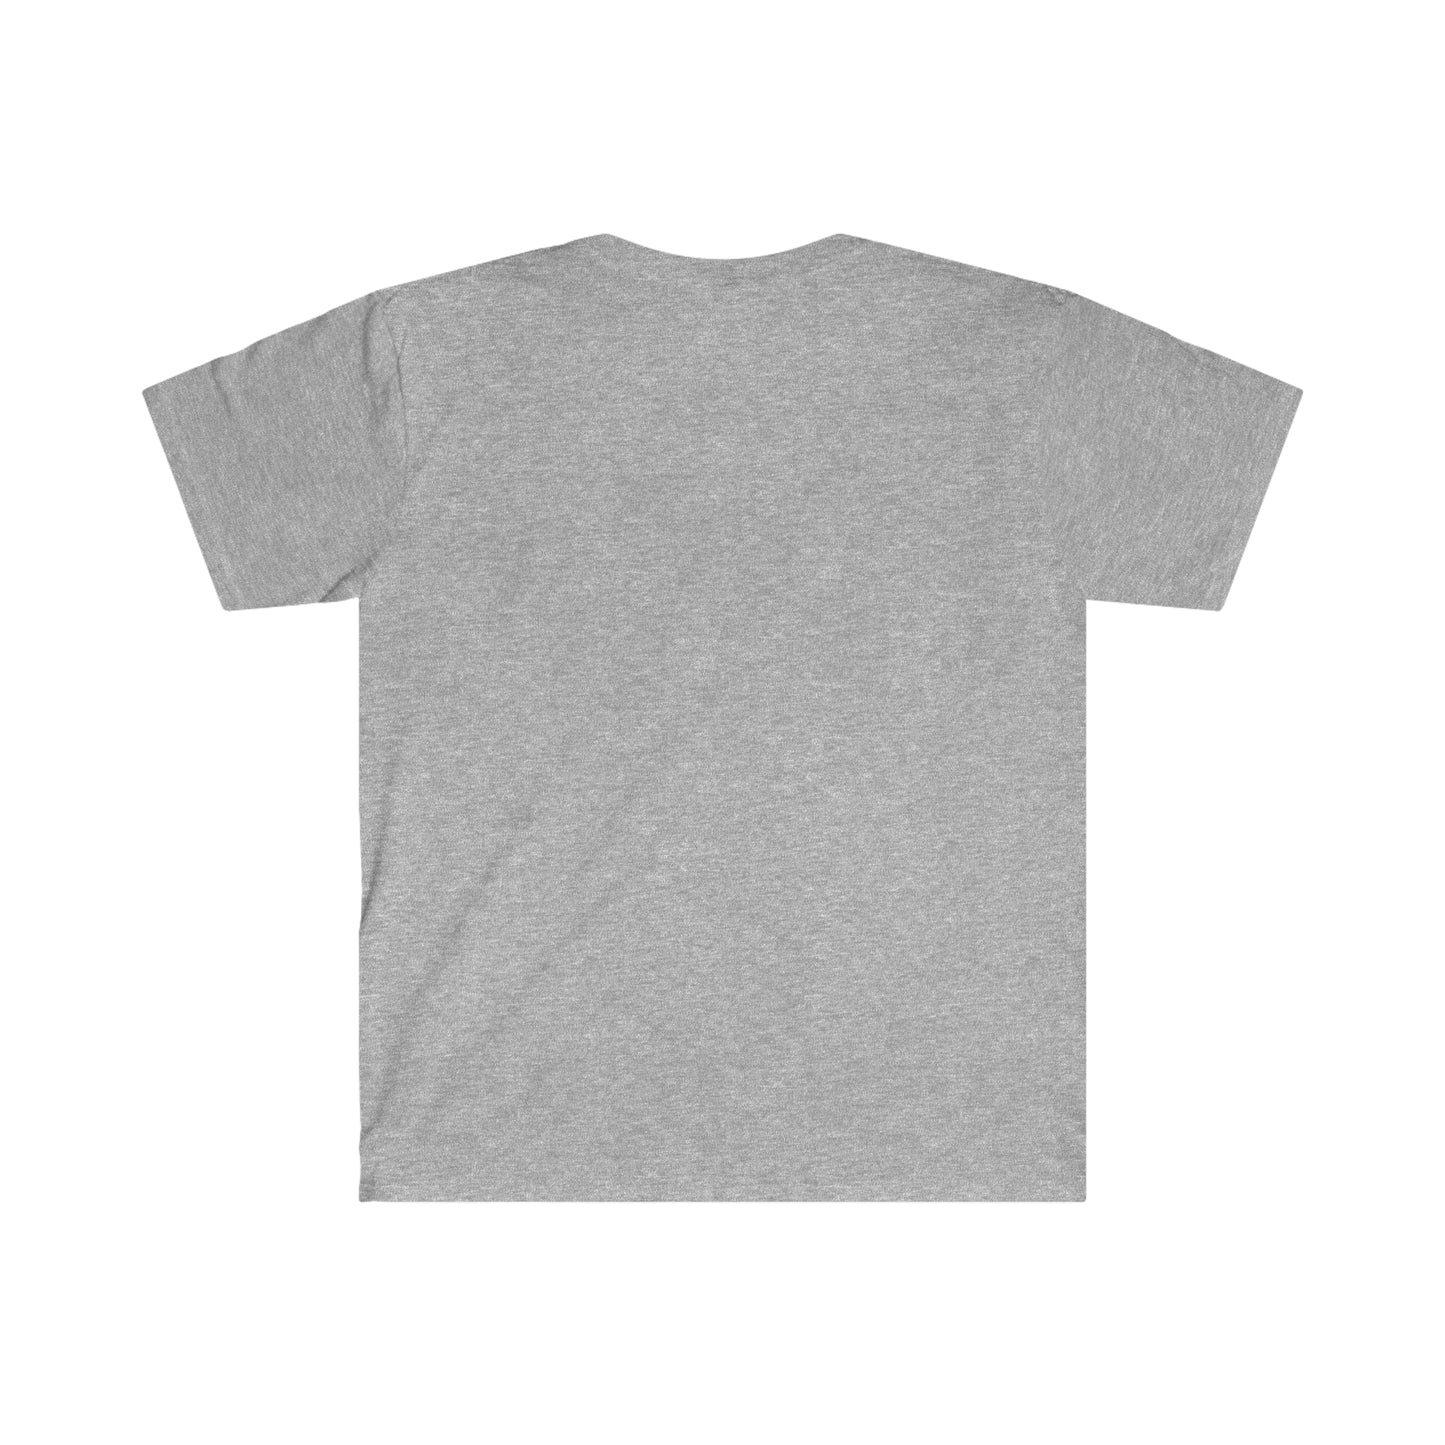 Pecatonica Vikings - Adult T-Shirt